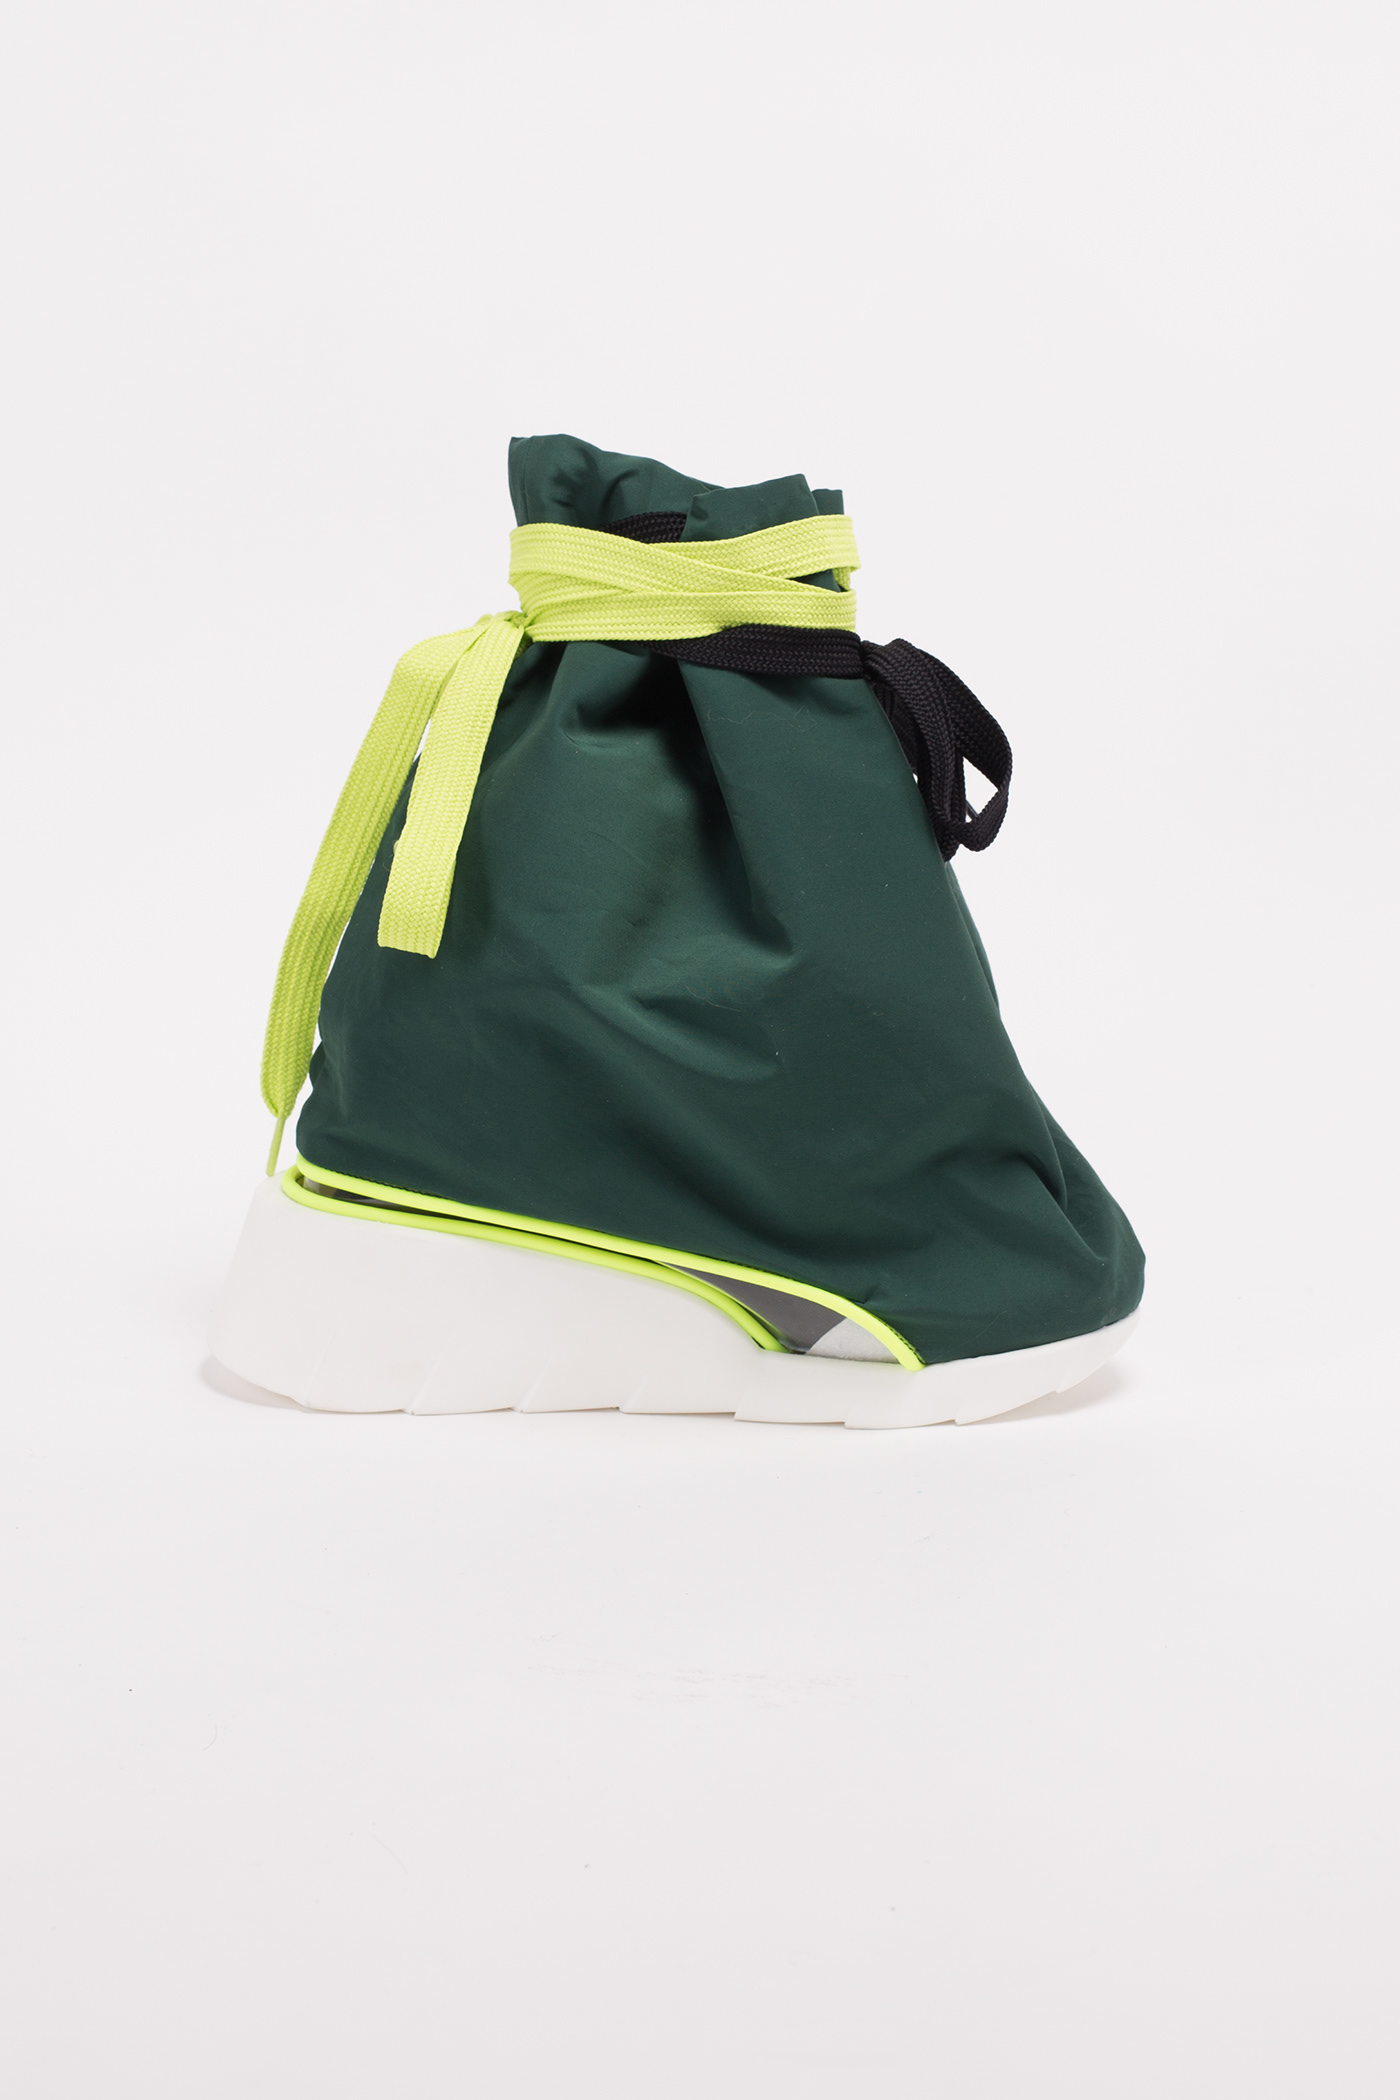 agender nogender genderfluid fluidity concept design art footwear futuristic innovation